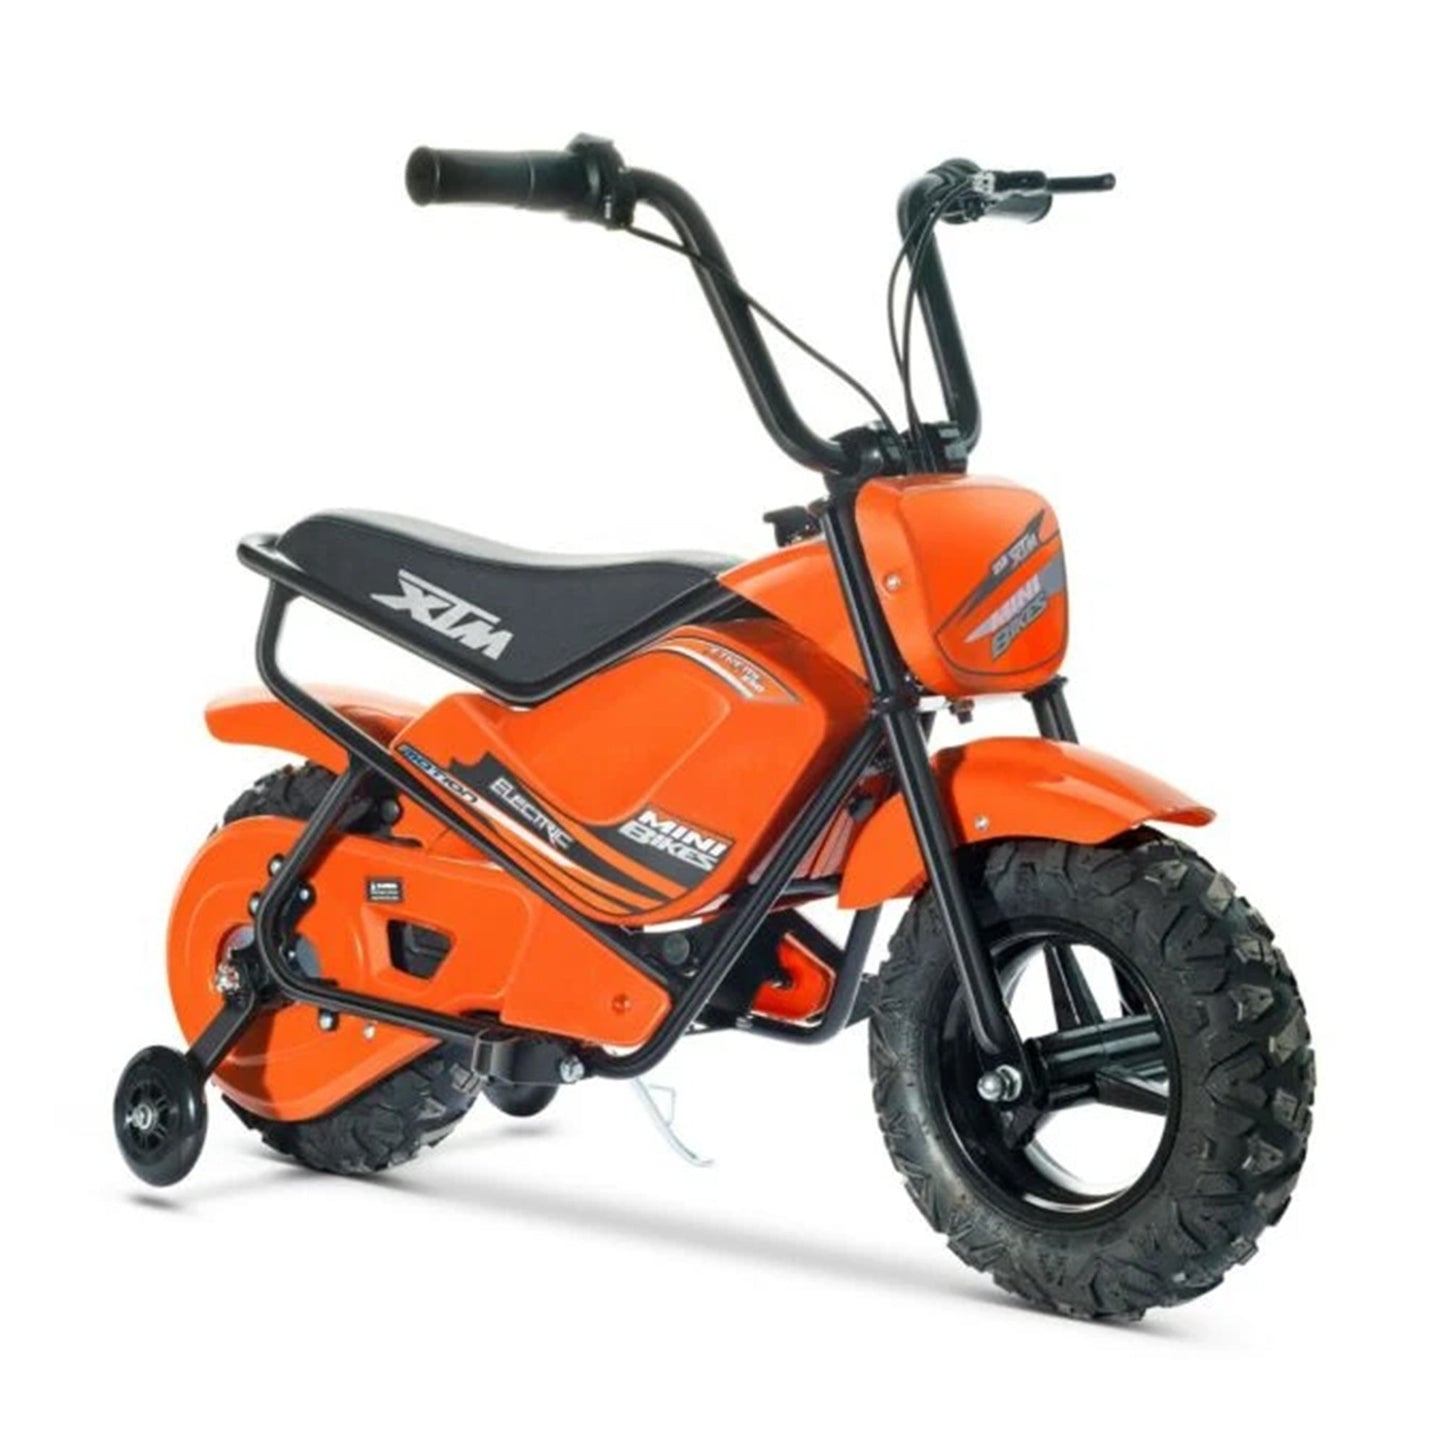 "Orange mini dirt bike scrambler, 250 Watt 12 volt kids electric ride on, on a white background"